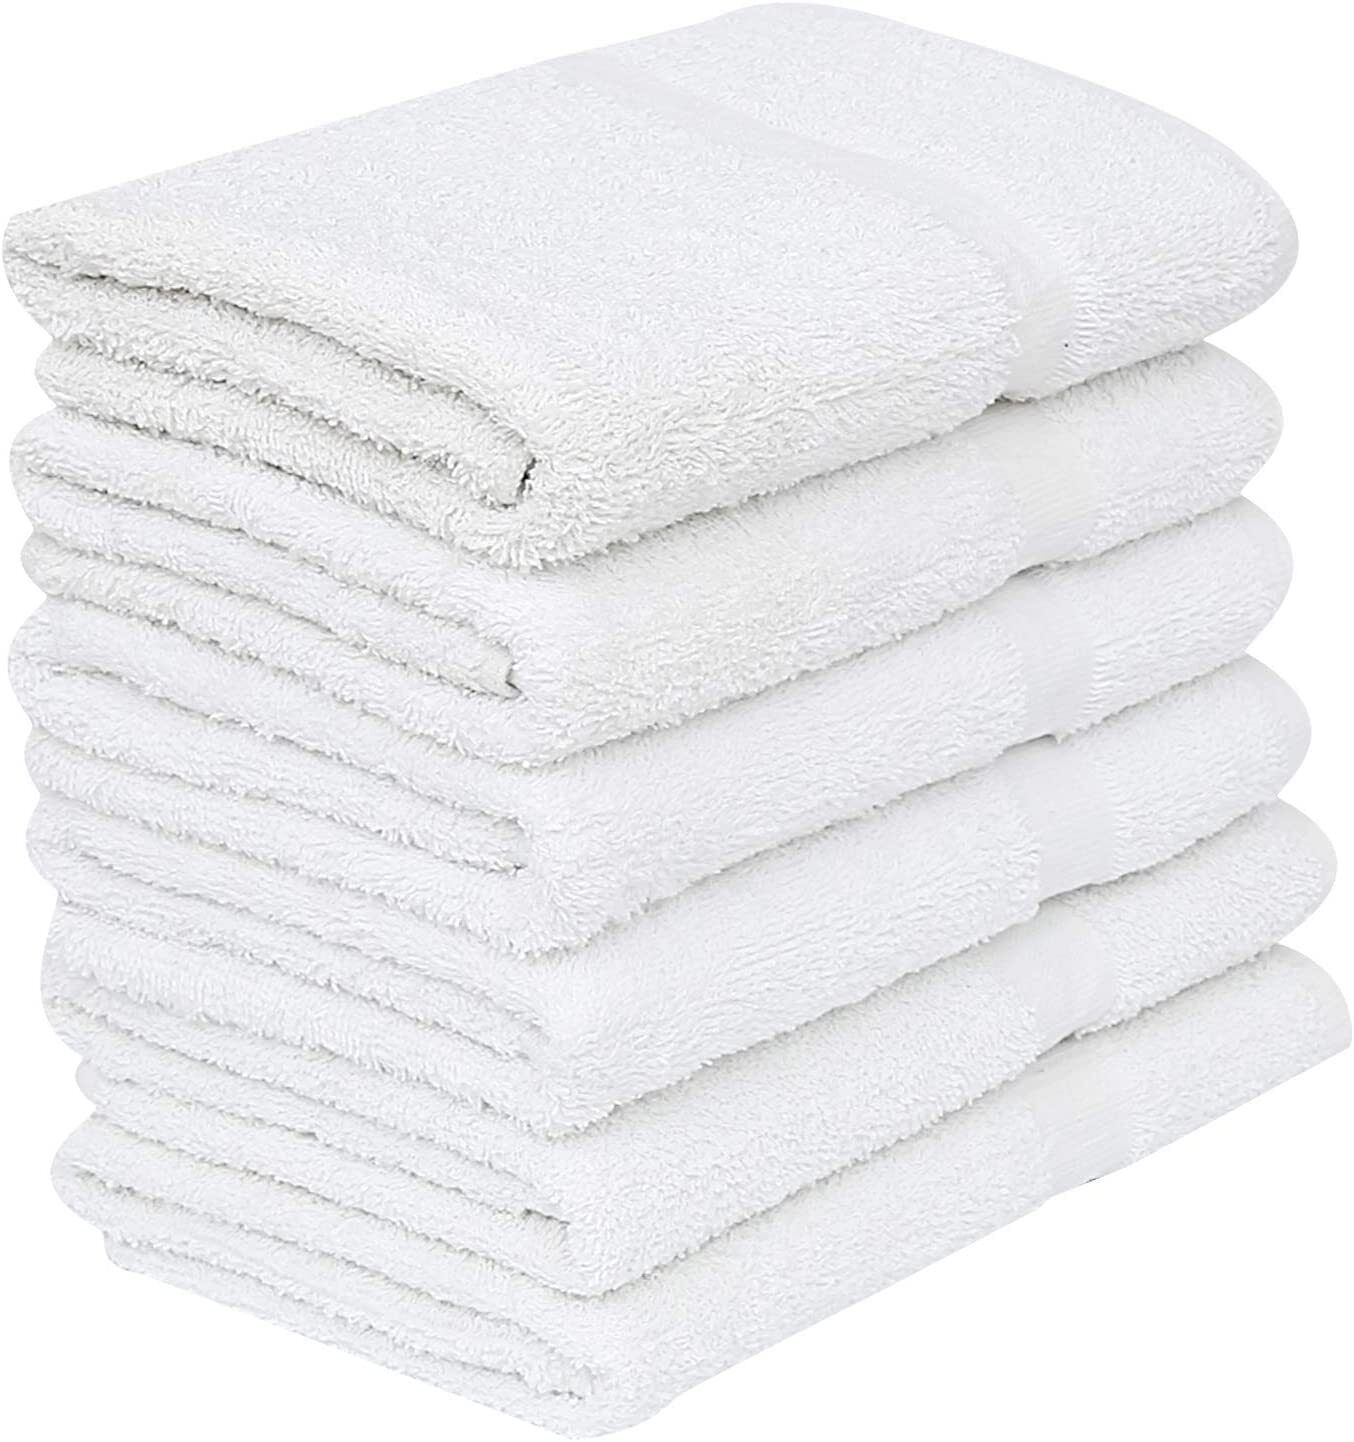 White Bath Towels Economy Pack of 6,12,60,48,120 Cotton Blend  24x48 Towel set